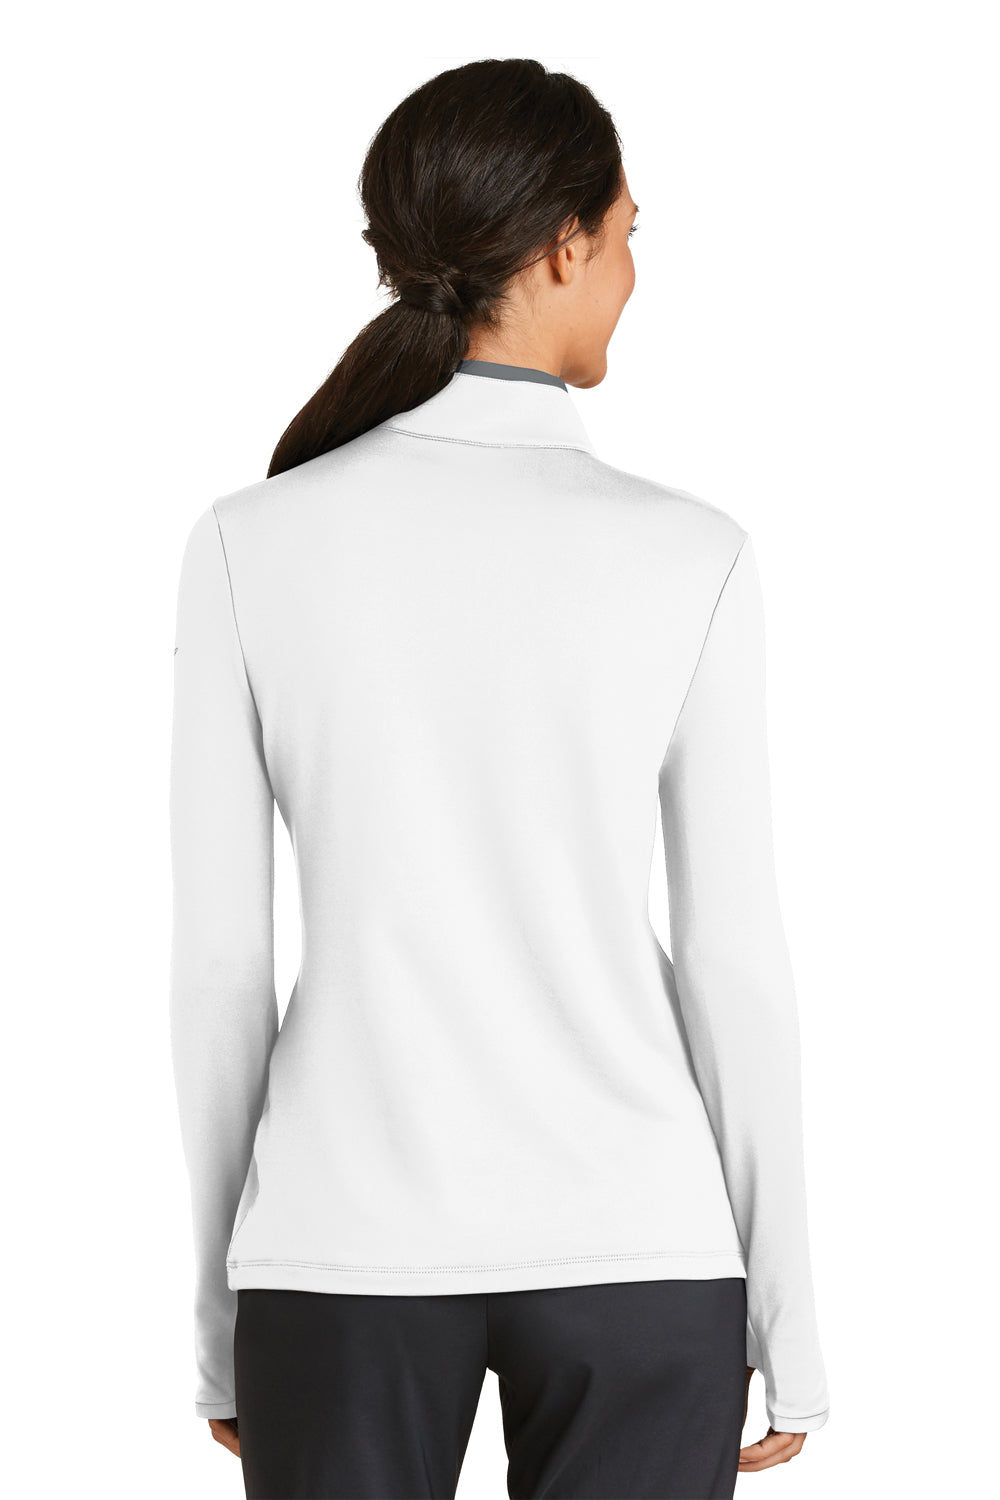 Nike 779796 Womens Dri-Fit Moisture Wicking 1/4 Zip Sweatshirt White/Dark Grey Model Back